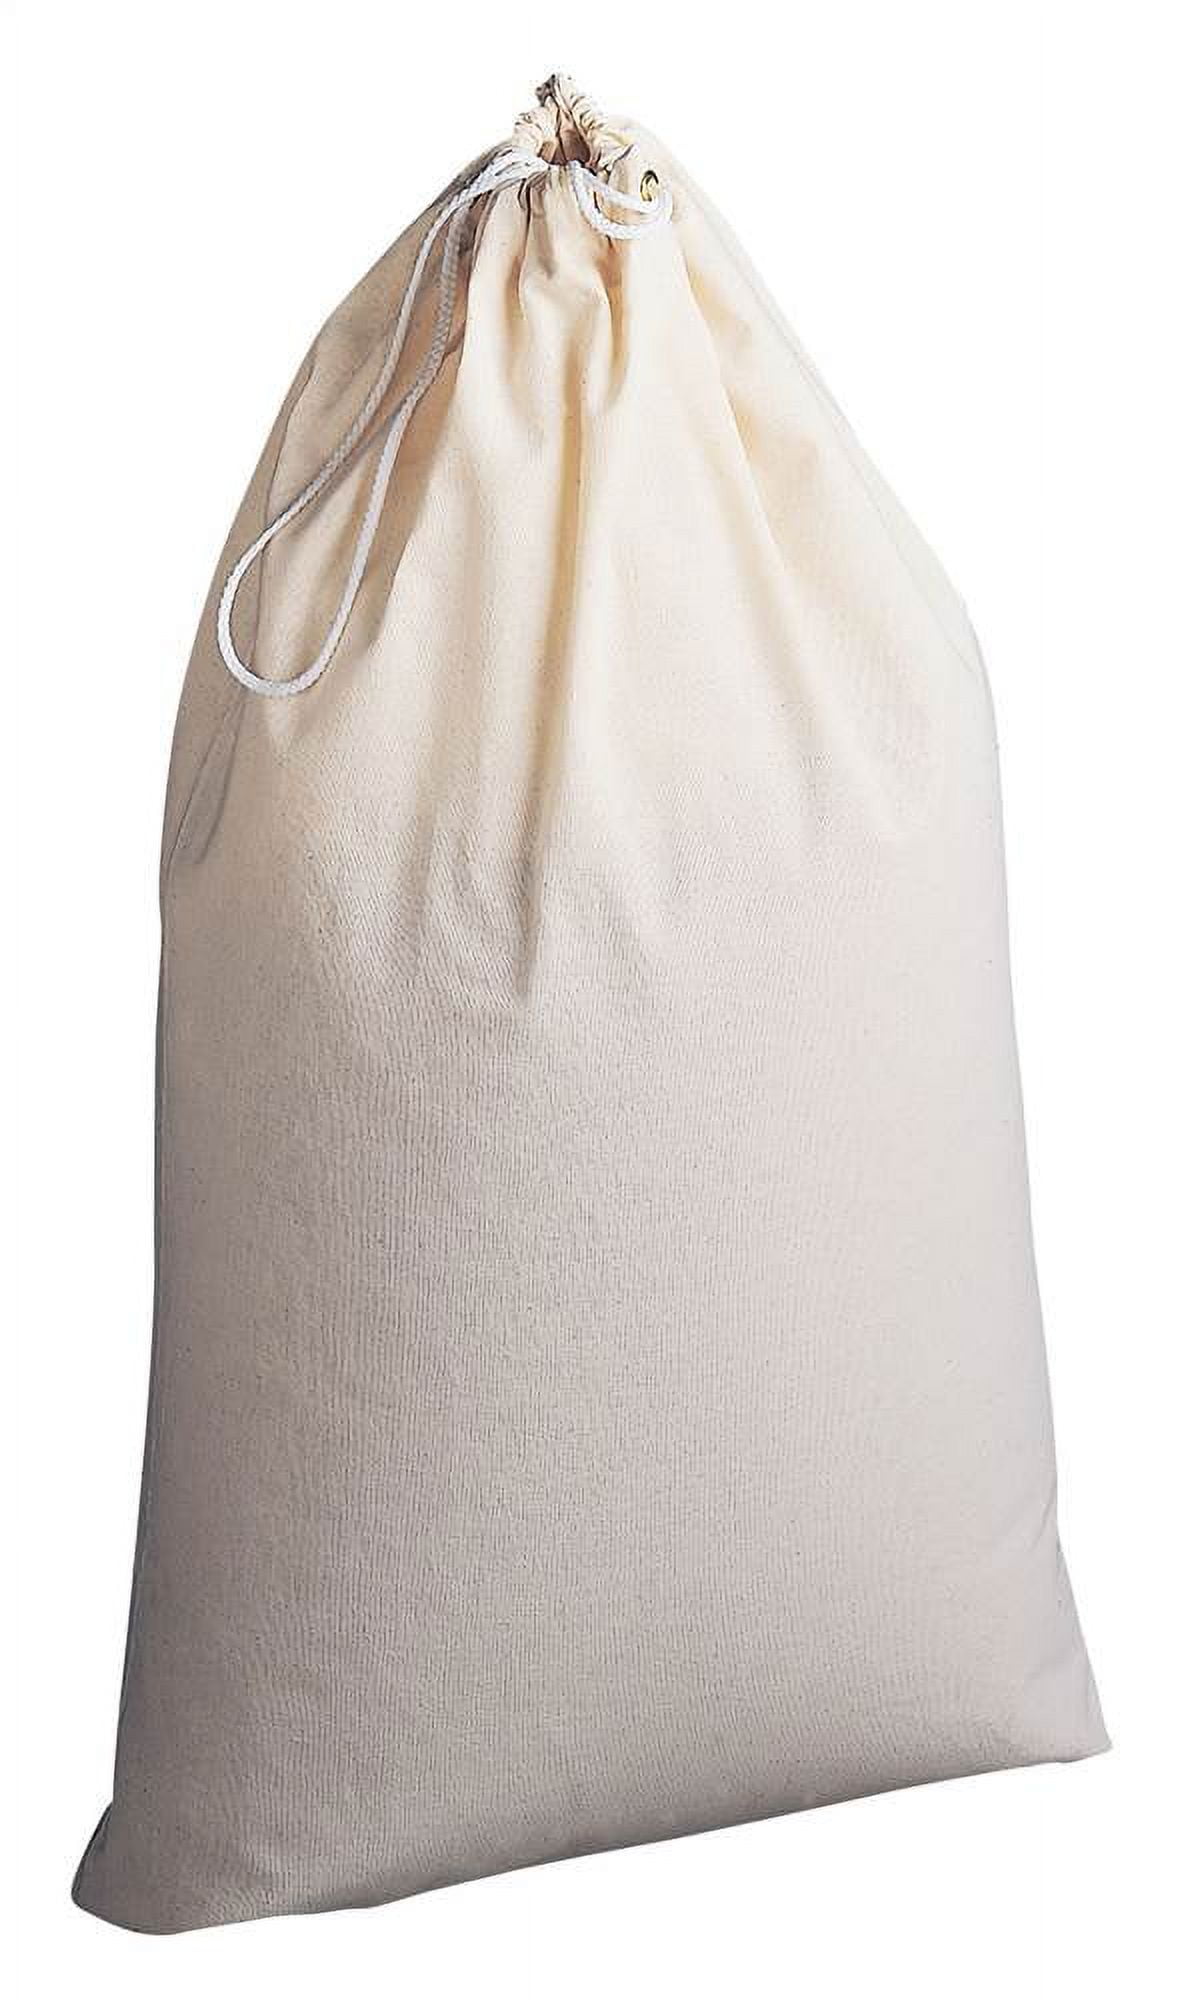 Organic Cotton Travel Laundry Bags